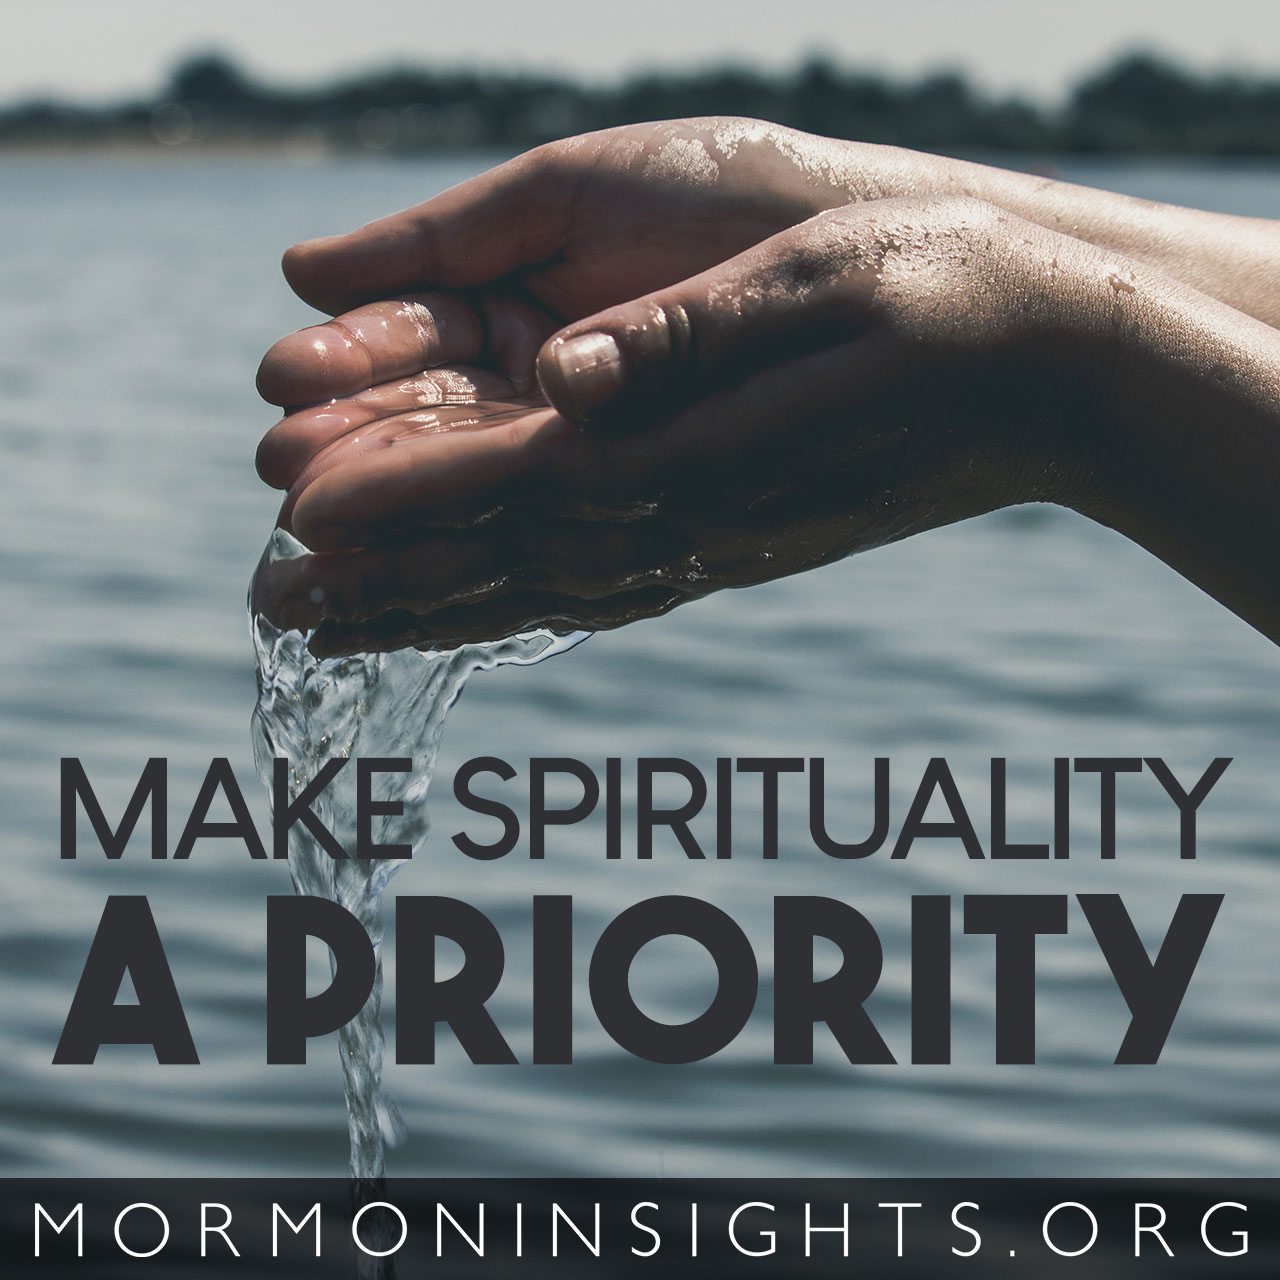 Make spirituality a priority